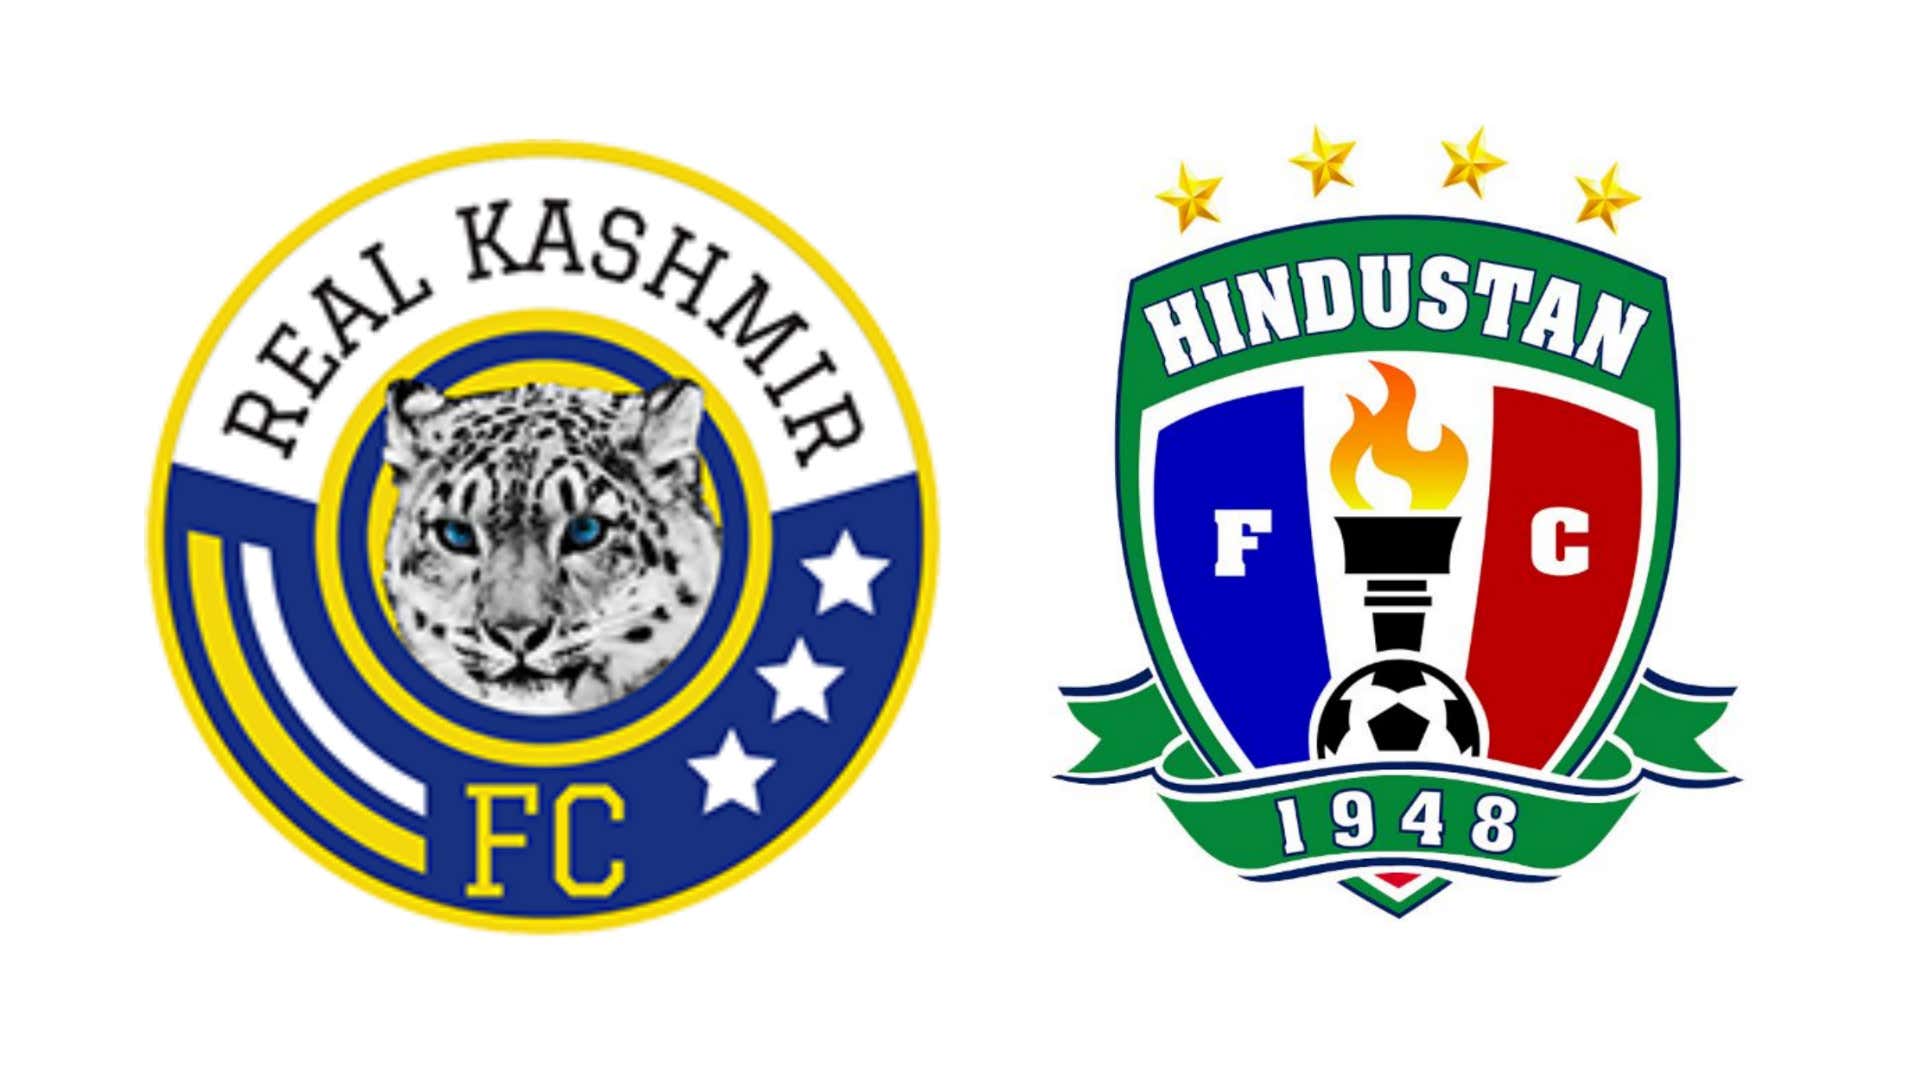 Real Kashmir Hindustan FC